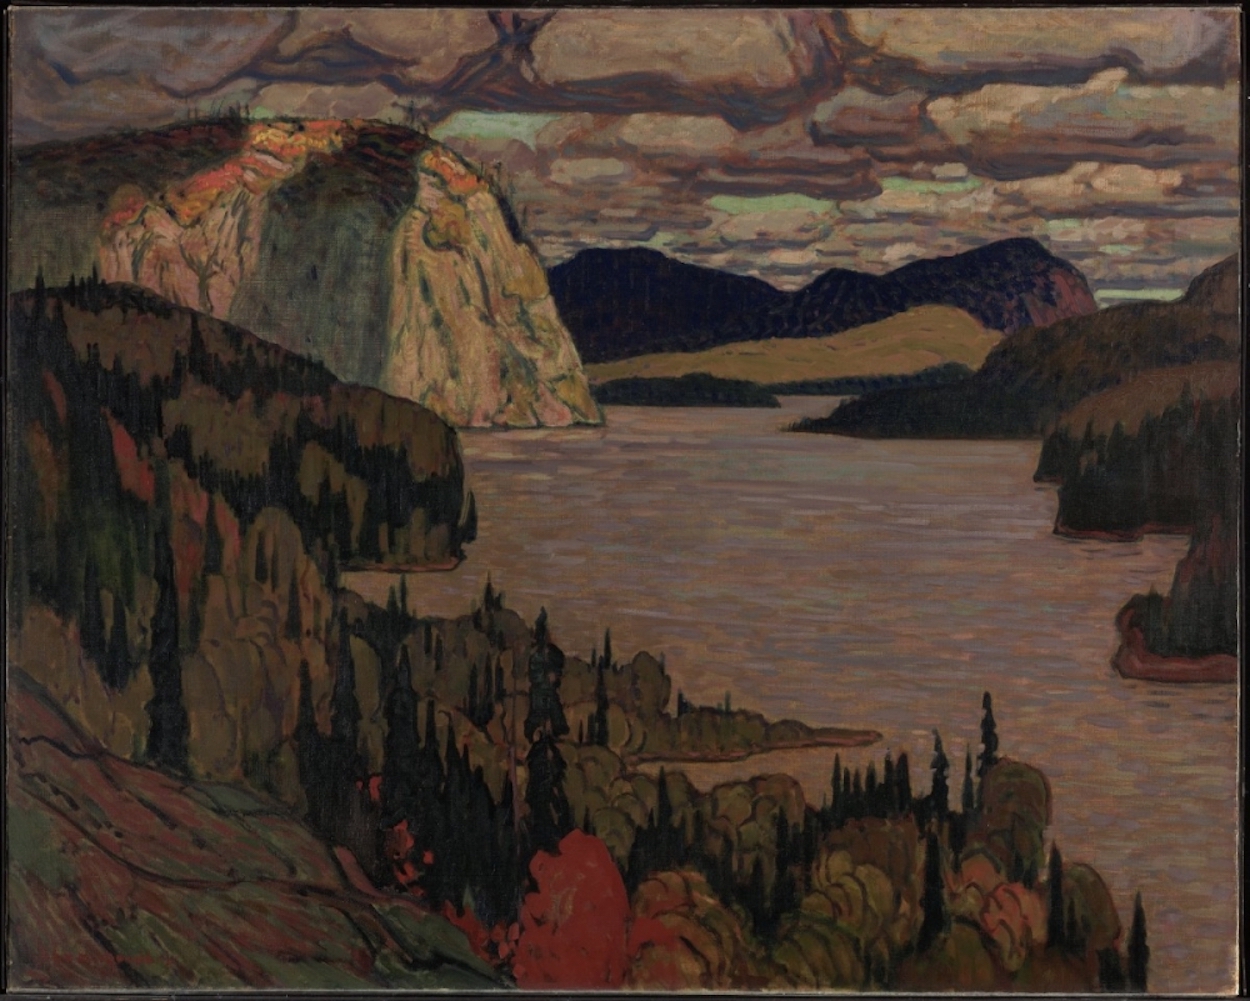 La terra solenne by J.E.H. MacDonald - 1921 